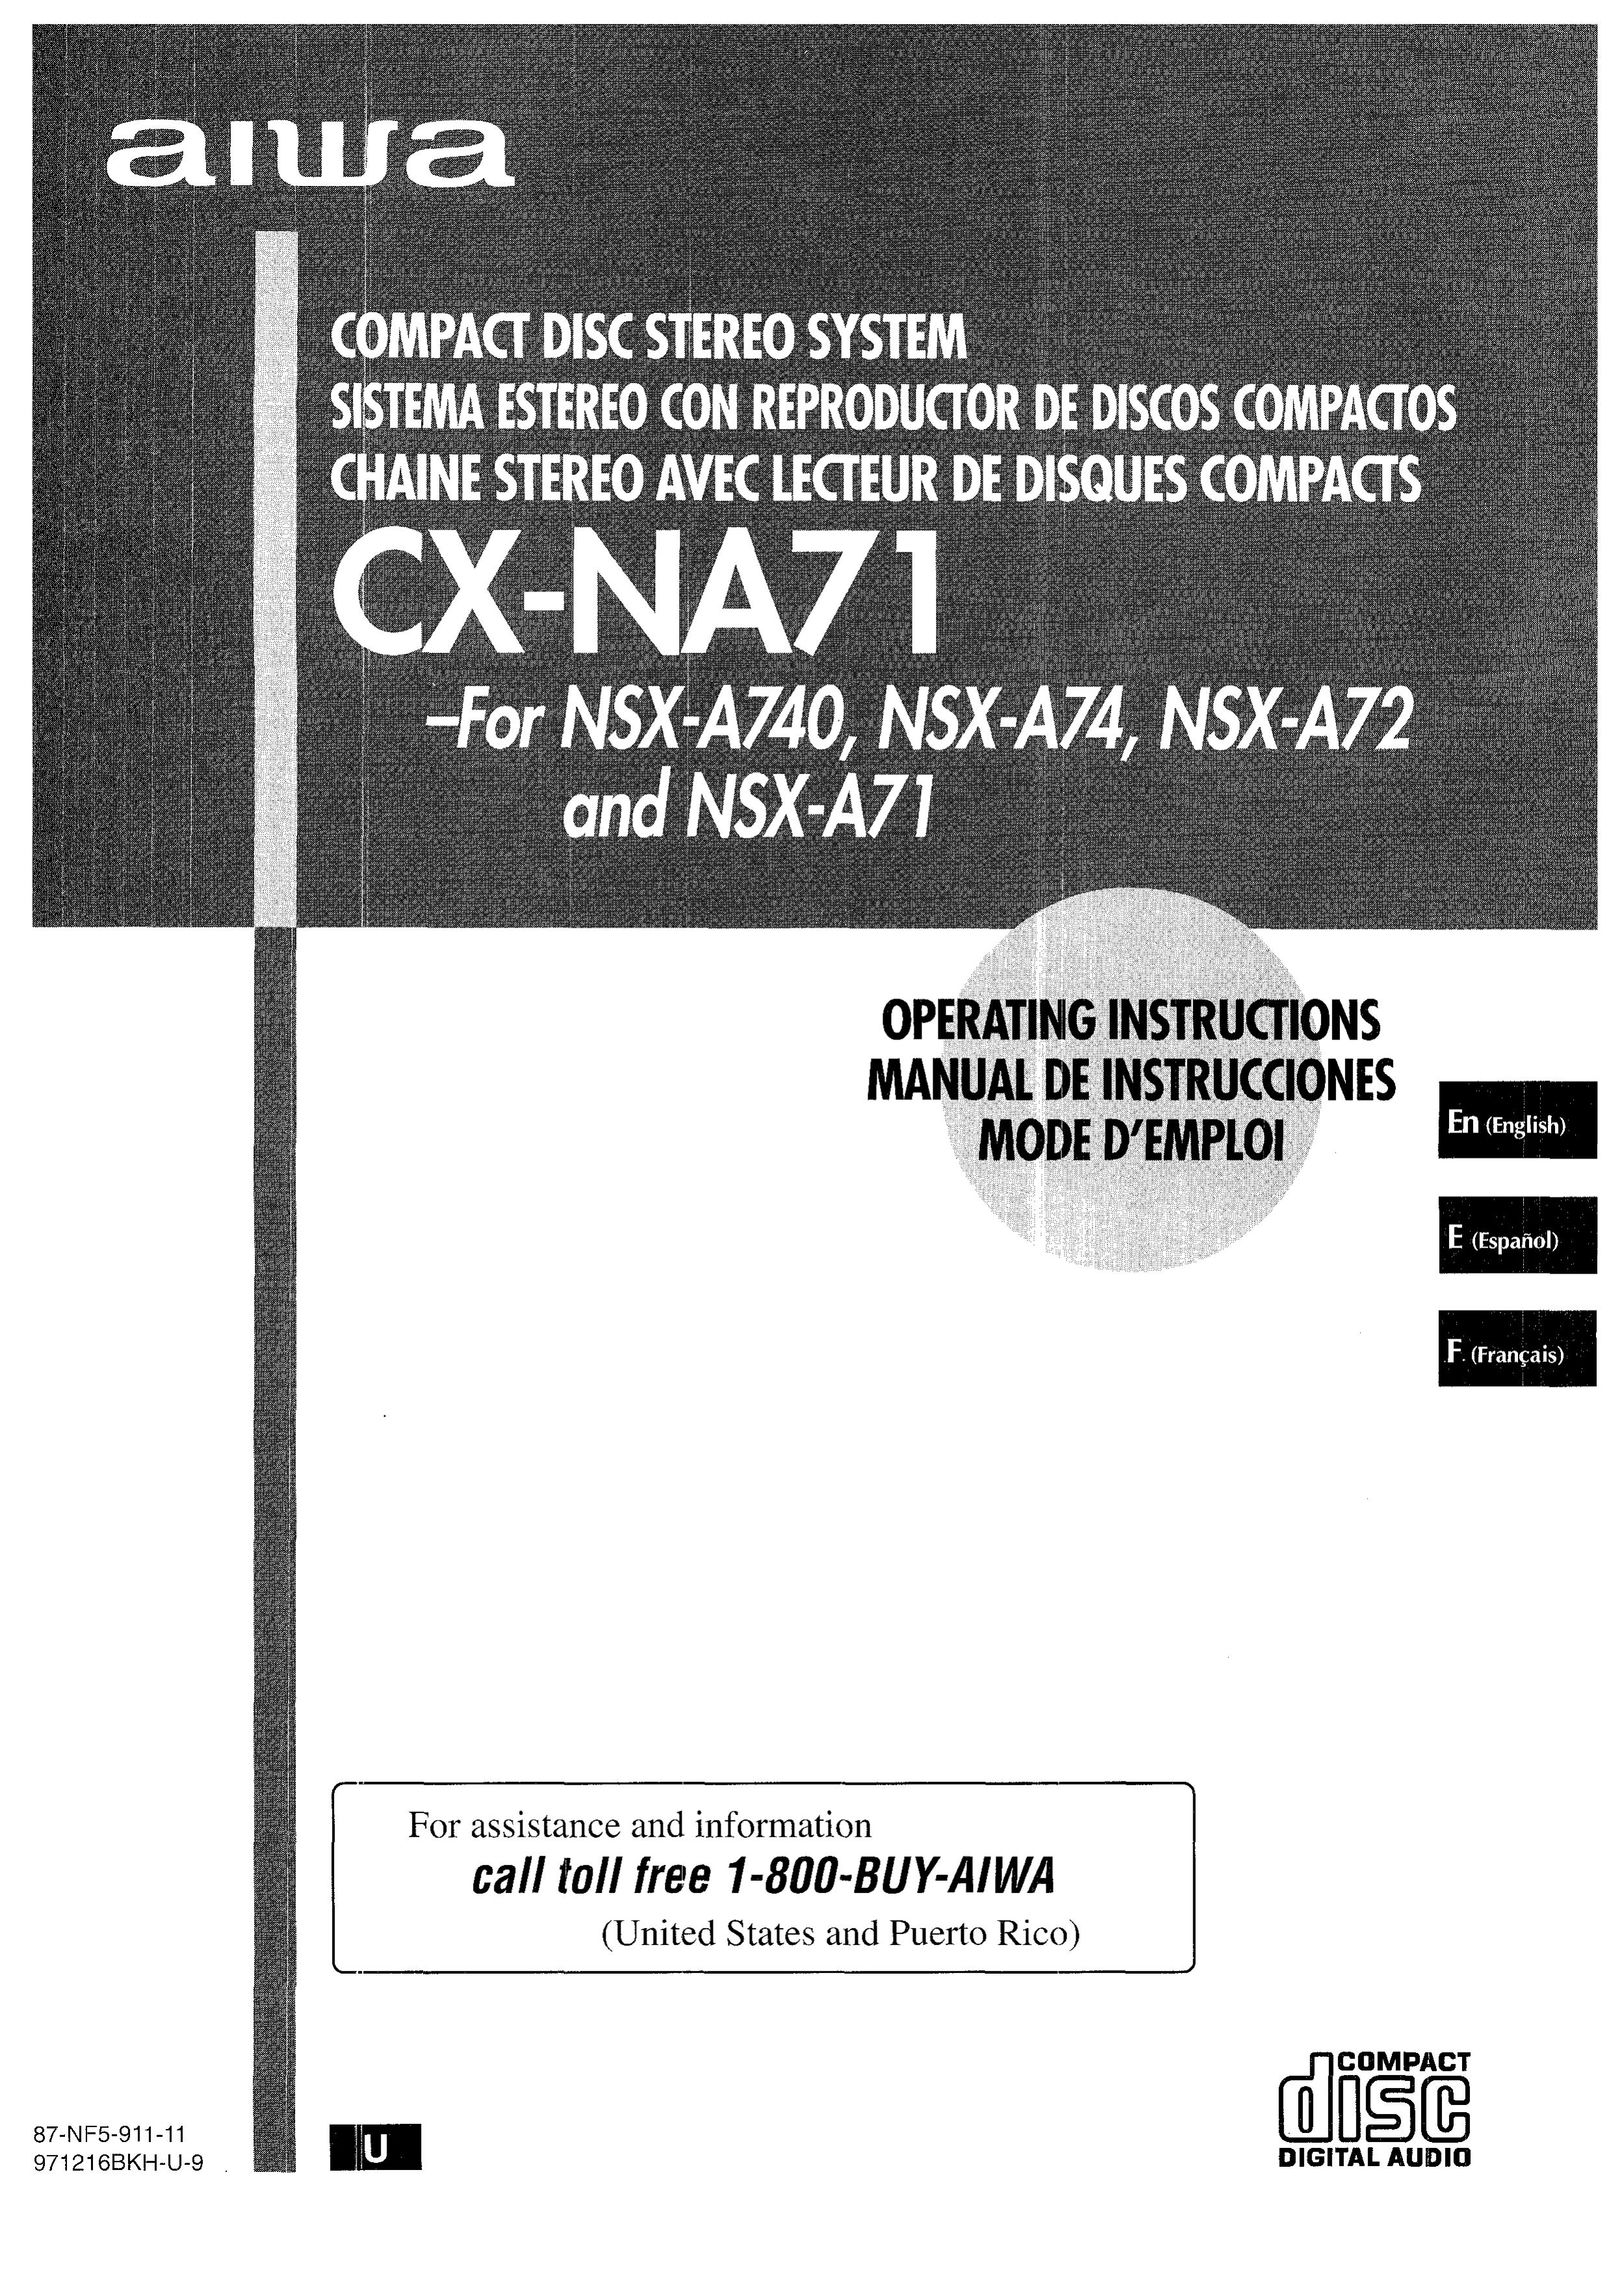 Aiwa CX-NA71 CD Player User Manual (Page 1)